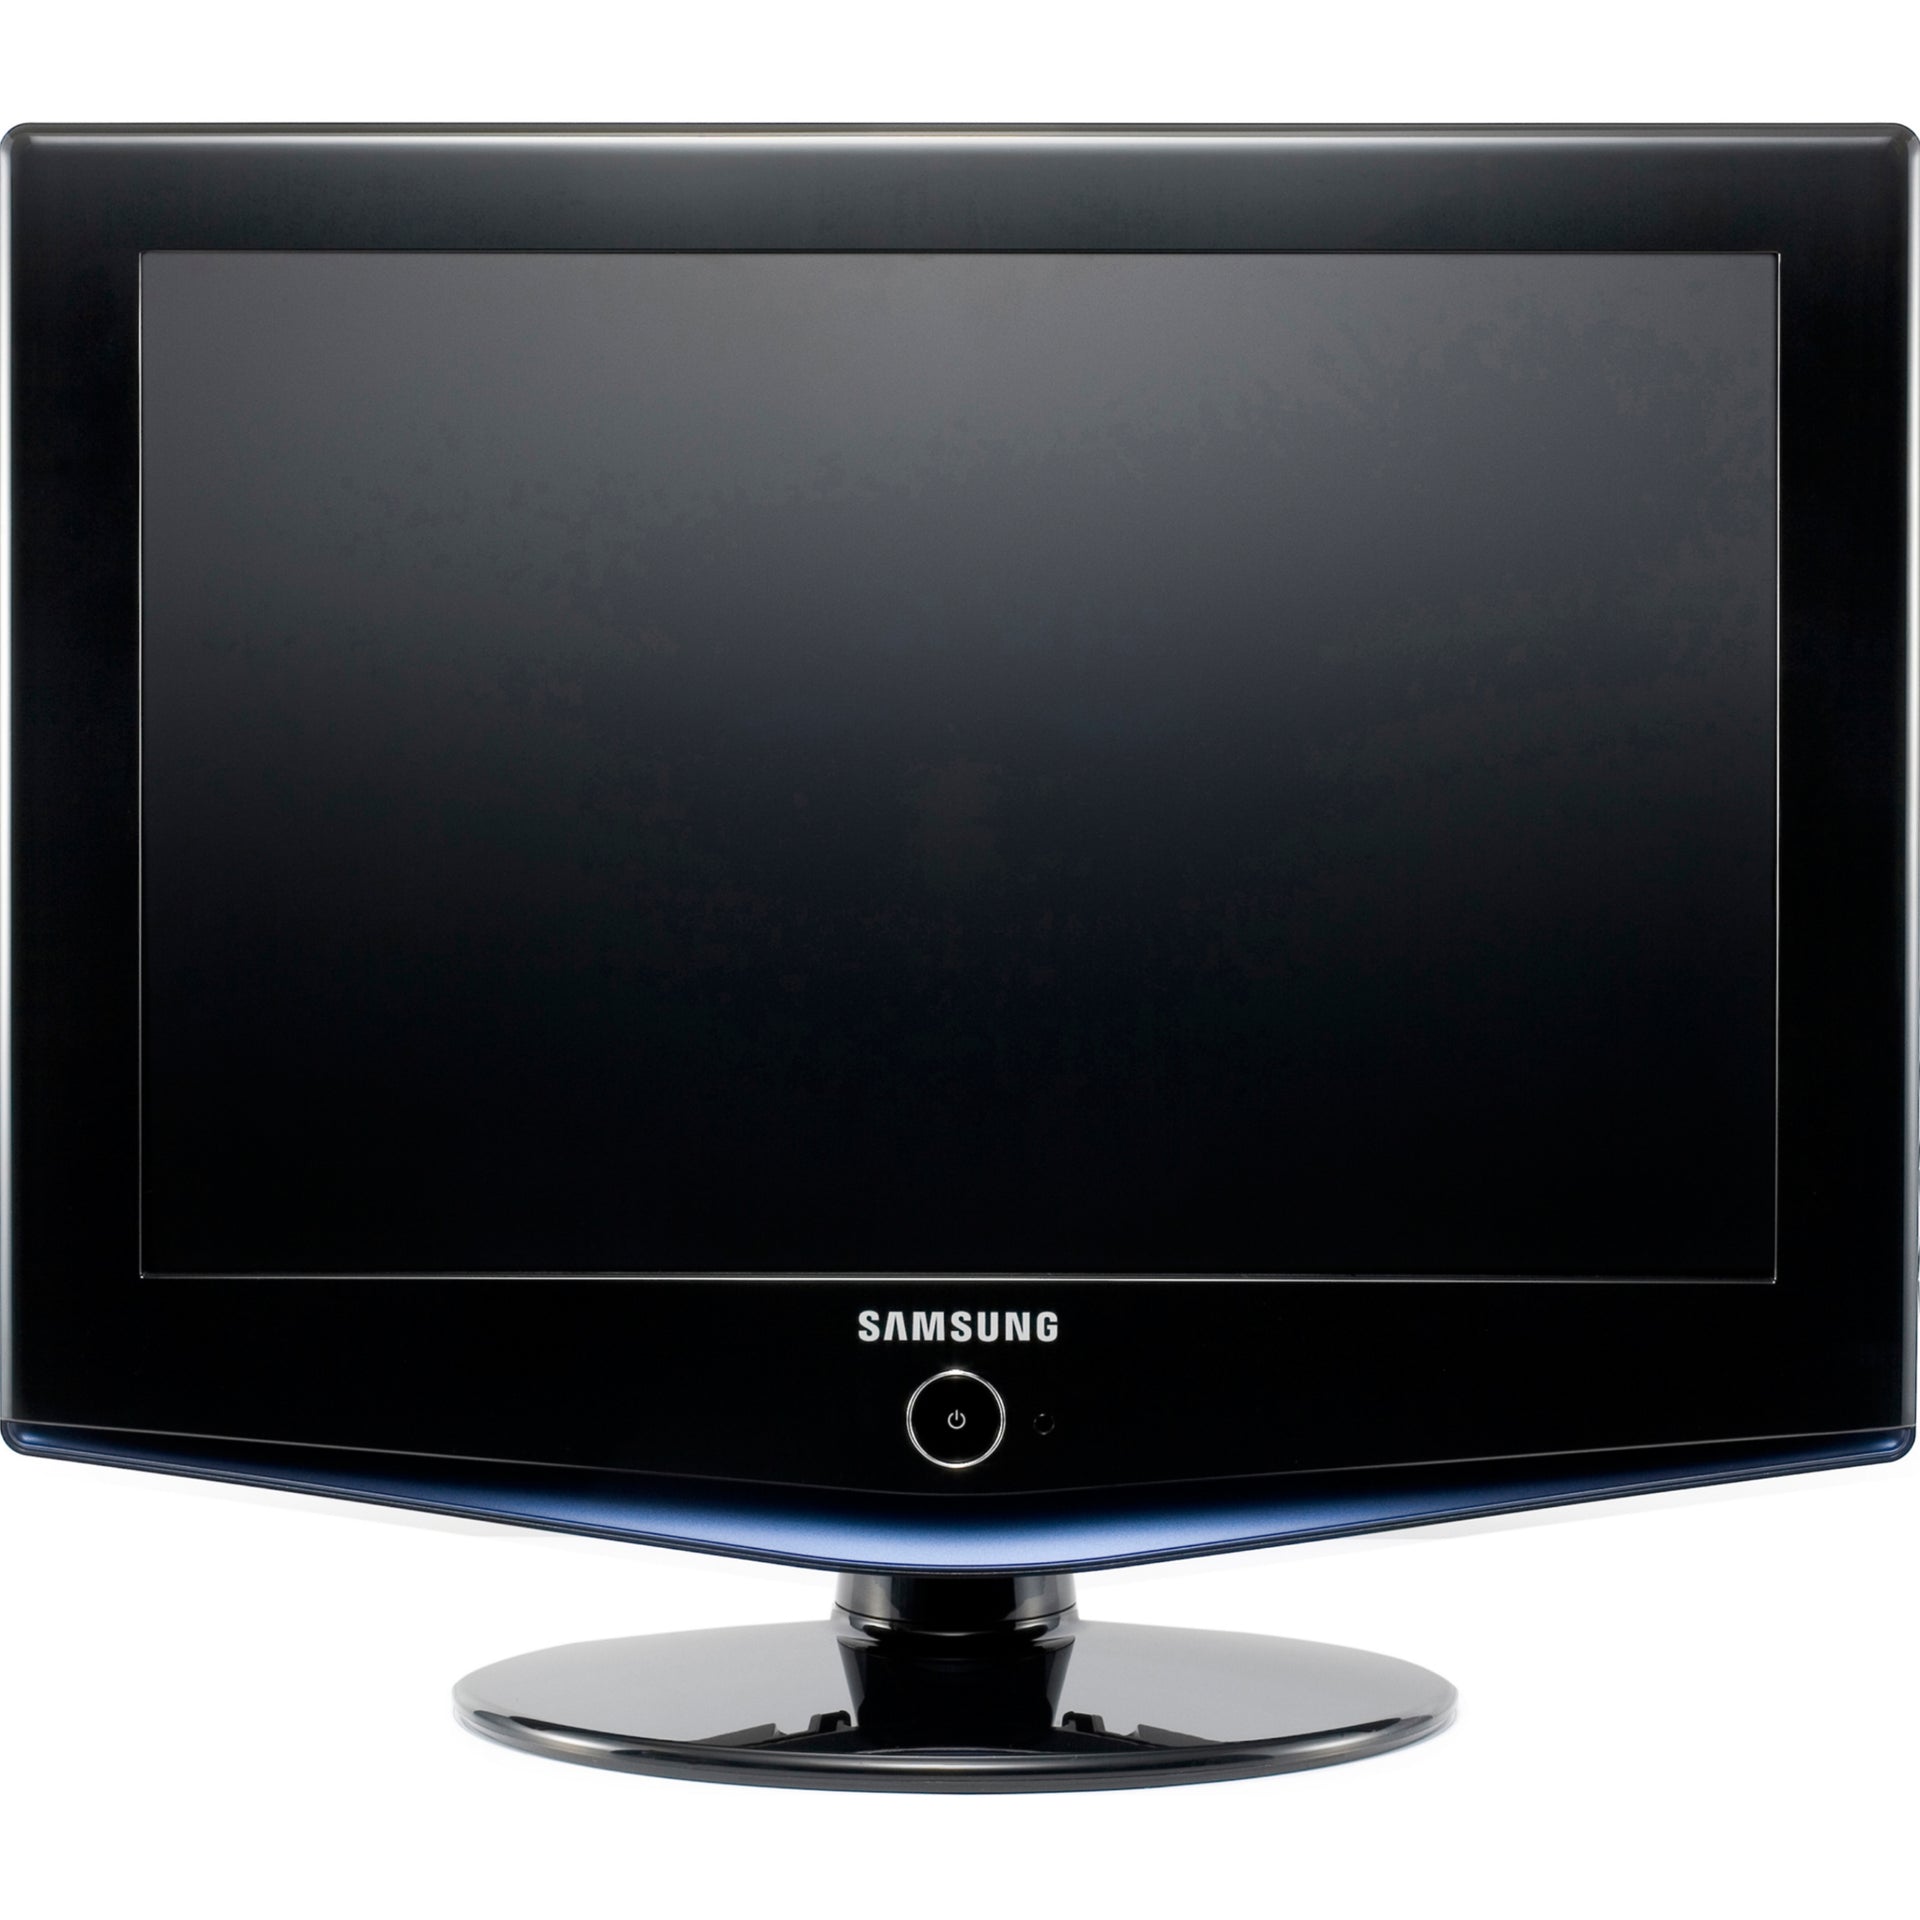 Купить телевизор на авито недорого в москве. Телевизор самсунг le32c454e3w. Самсунг le19r71b. Samsung le19r71b подставка. Телевизор Samsung le23r81w.